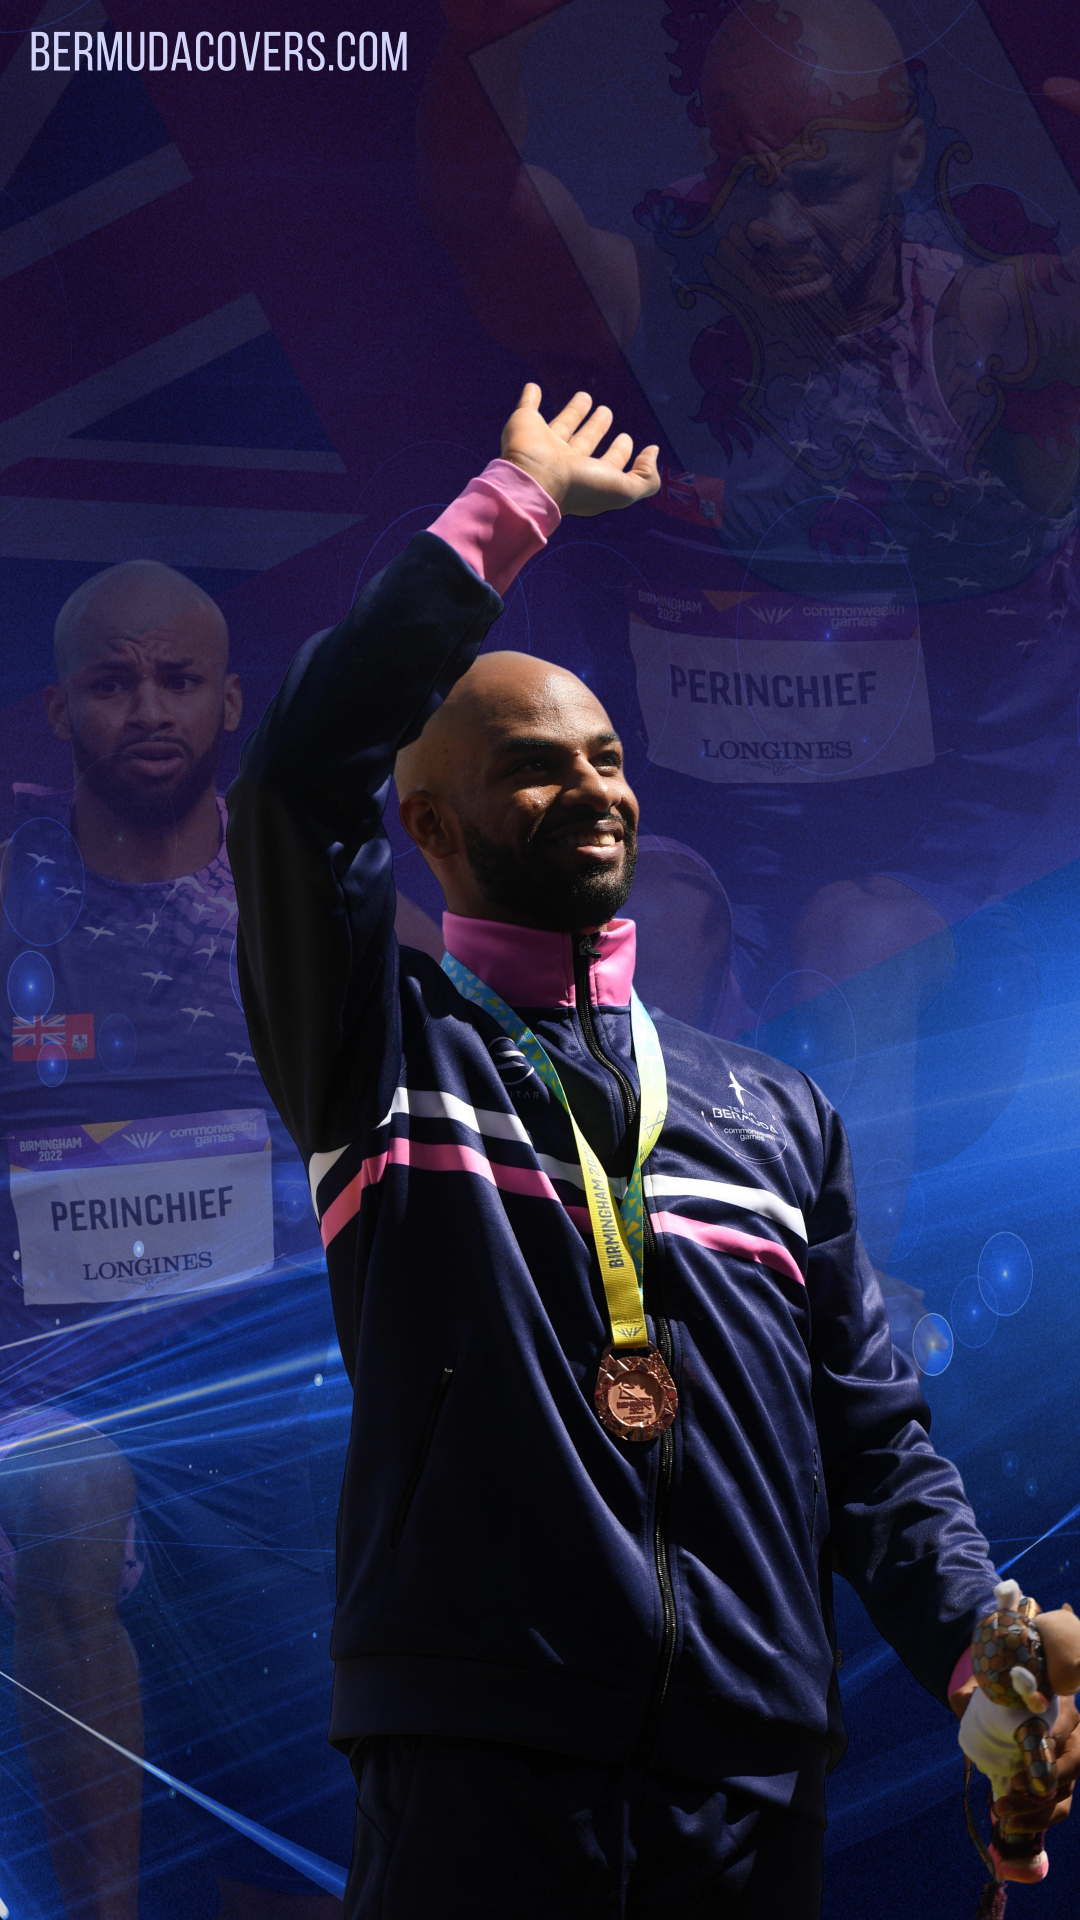 Jah-Nhai Perinchief Bermuda Commonwealth Games Medal Winner Graphic Image Social Media 2022 (1)